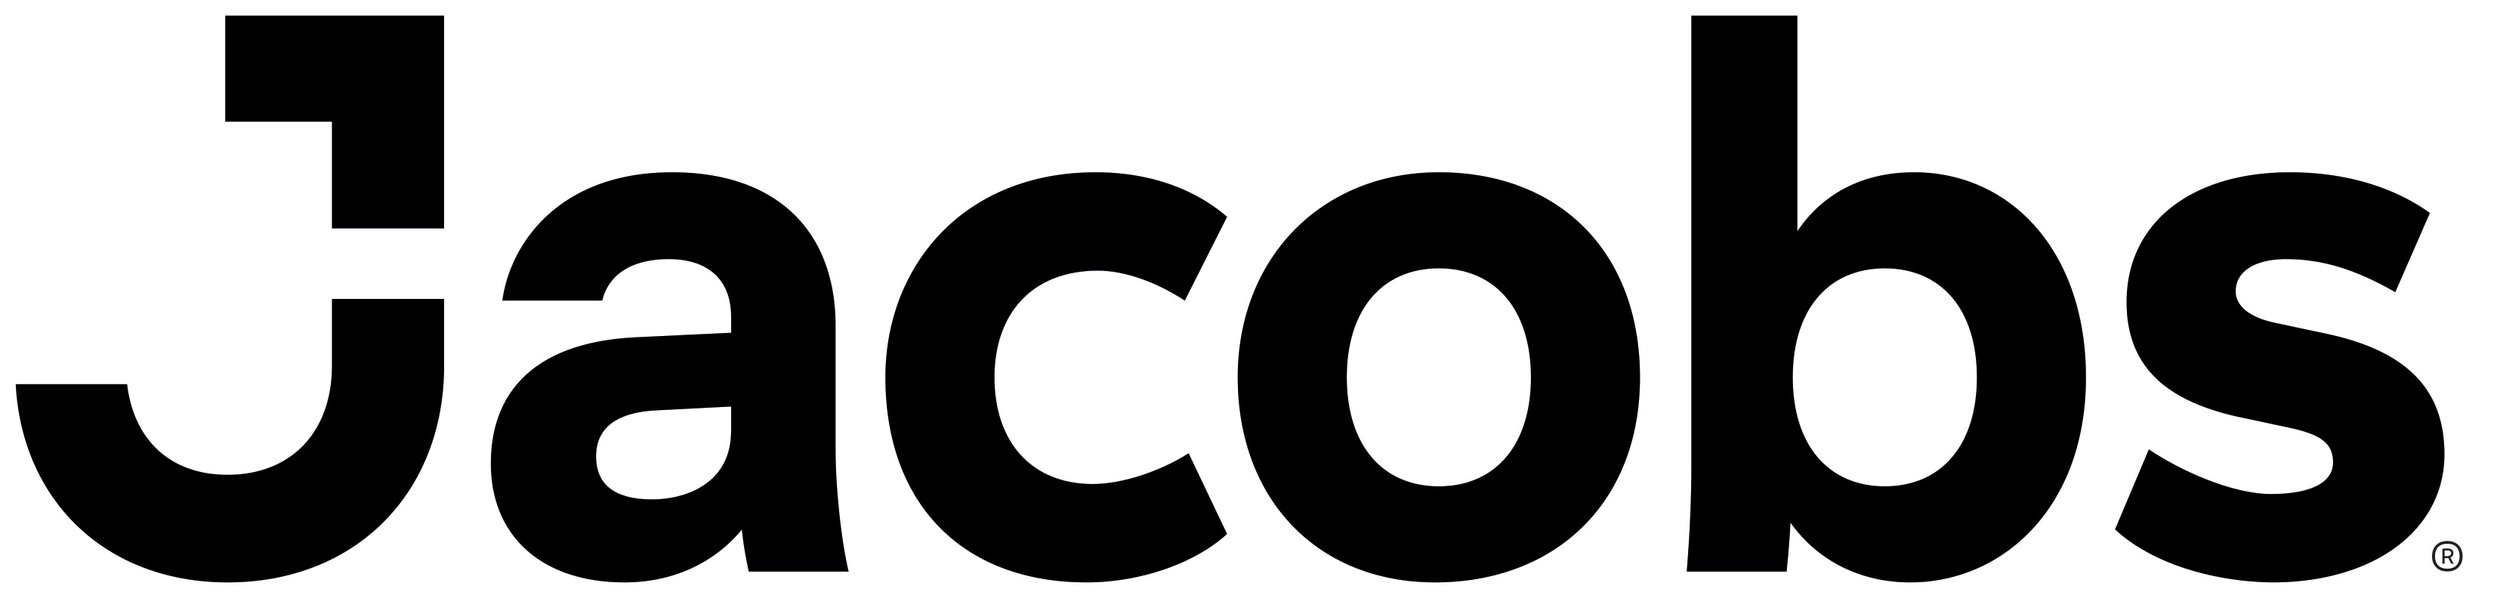 Jacobs_logo_cmyk_richblack.jpg